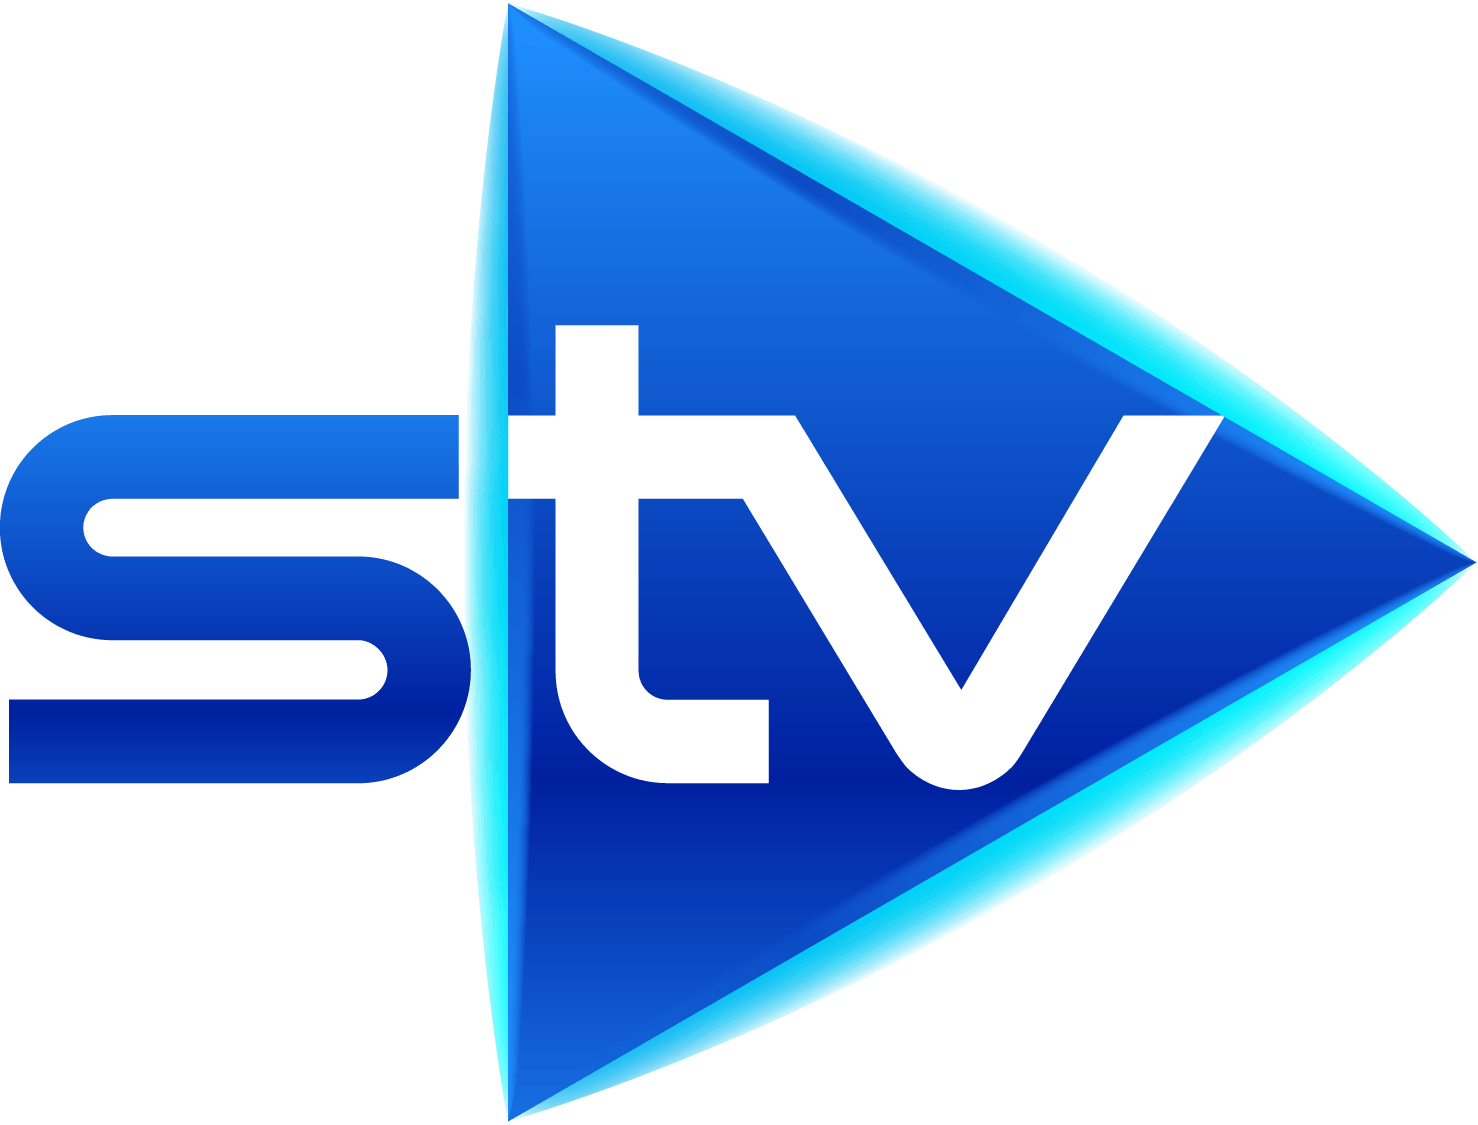 Blue TV Logo - STV logo 2014.png